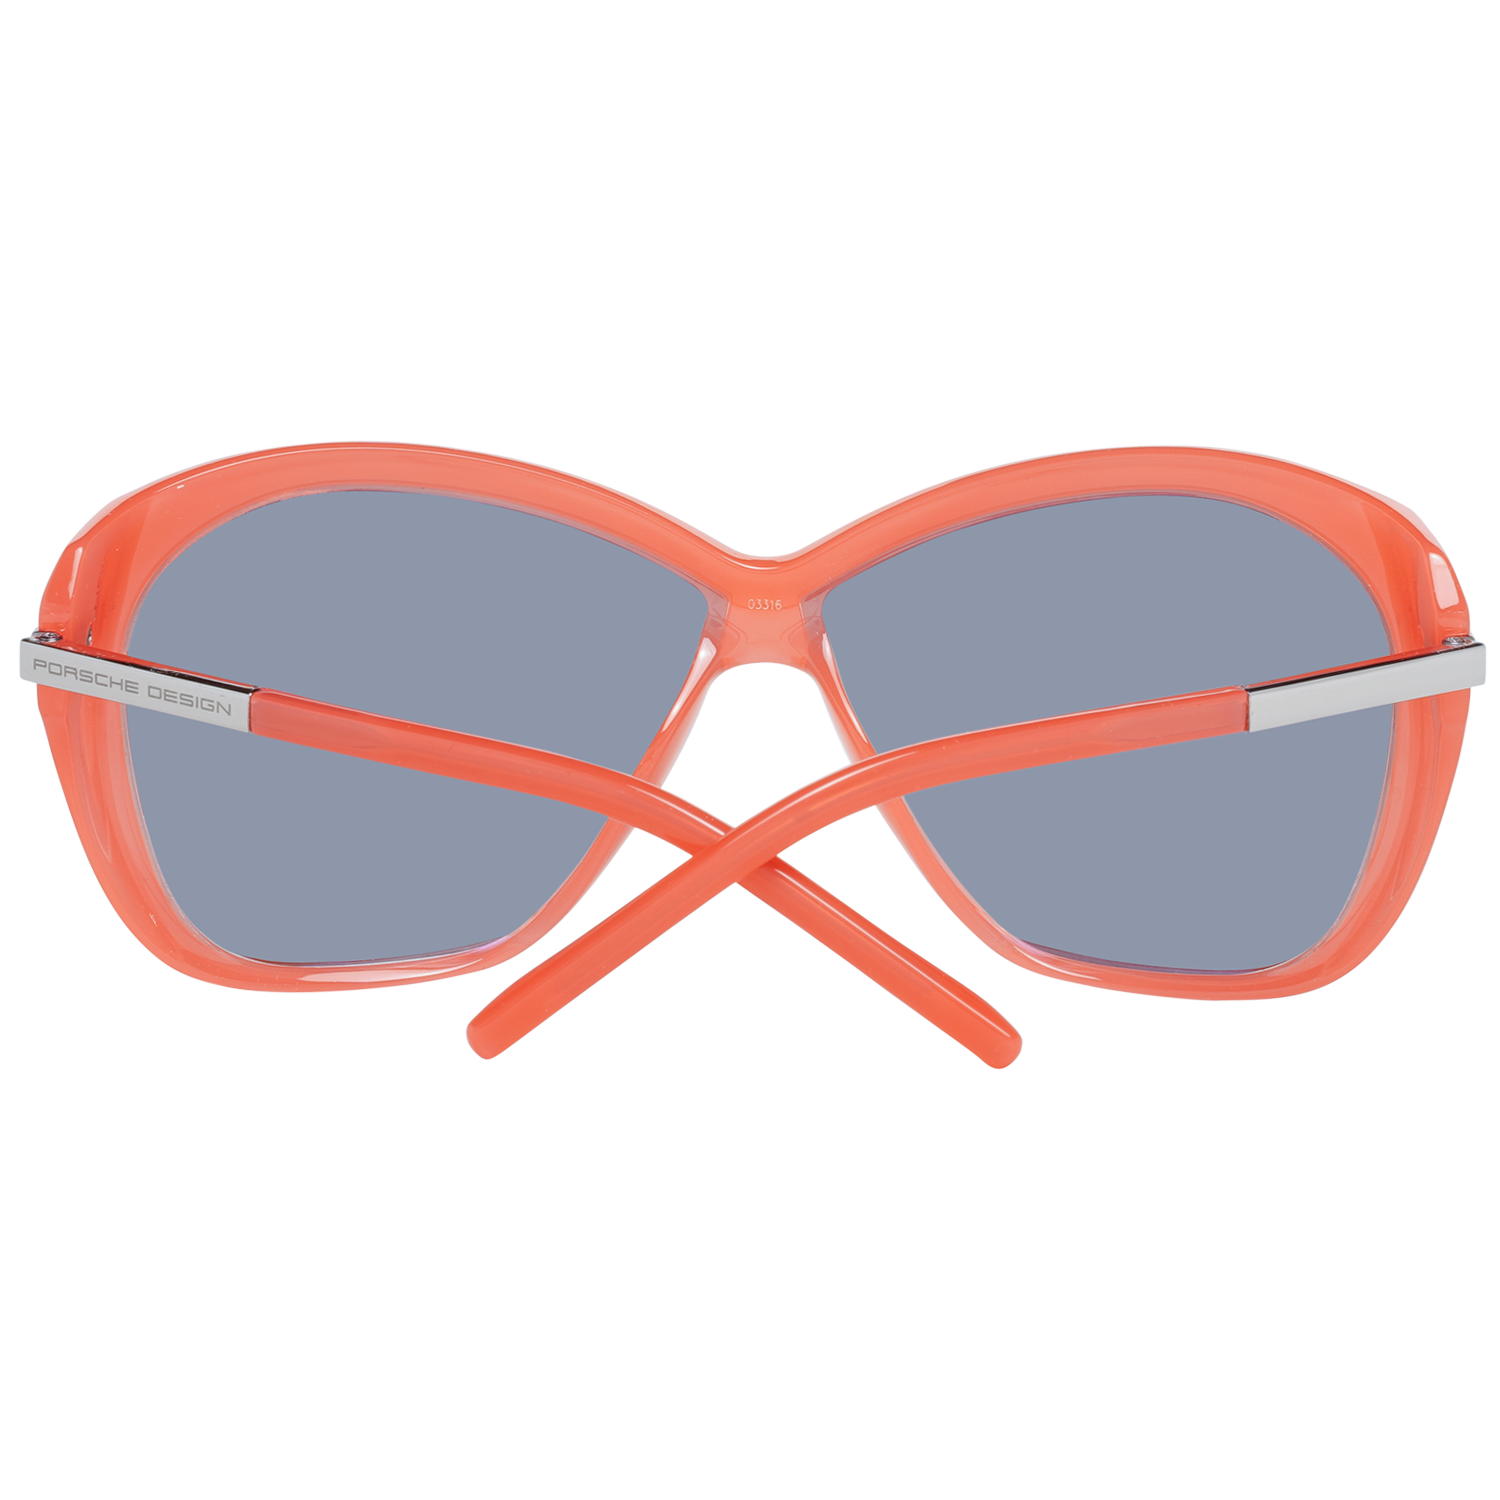 Porsche Design Sunglasses Porsche Design Sunglasses P8603 A 66mm Eyeglasses Eyewear UK USA Australia 